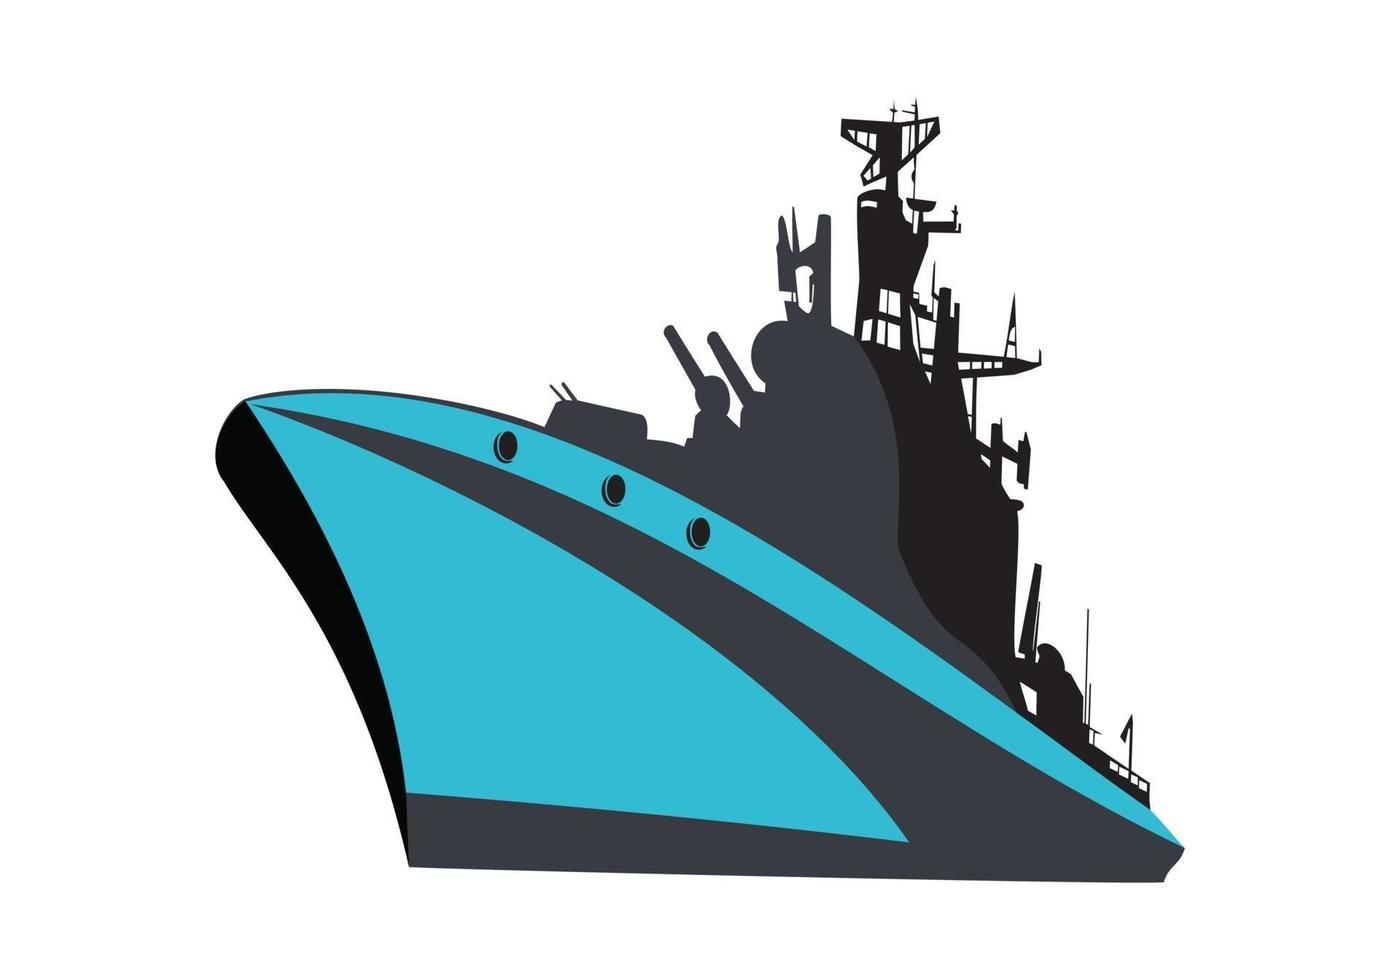 nave militare, incrociatore, nave da guerra, illustrazione di progettazione di nave da guerra vettore